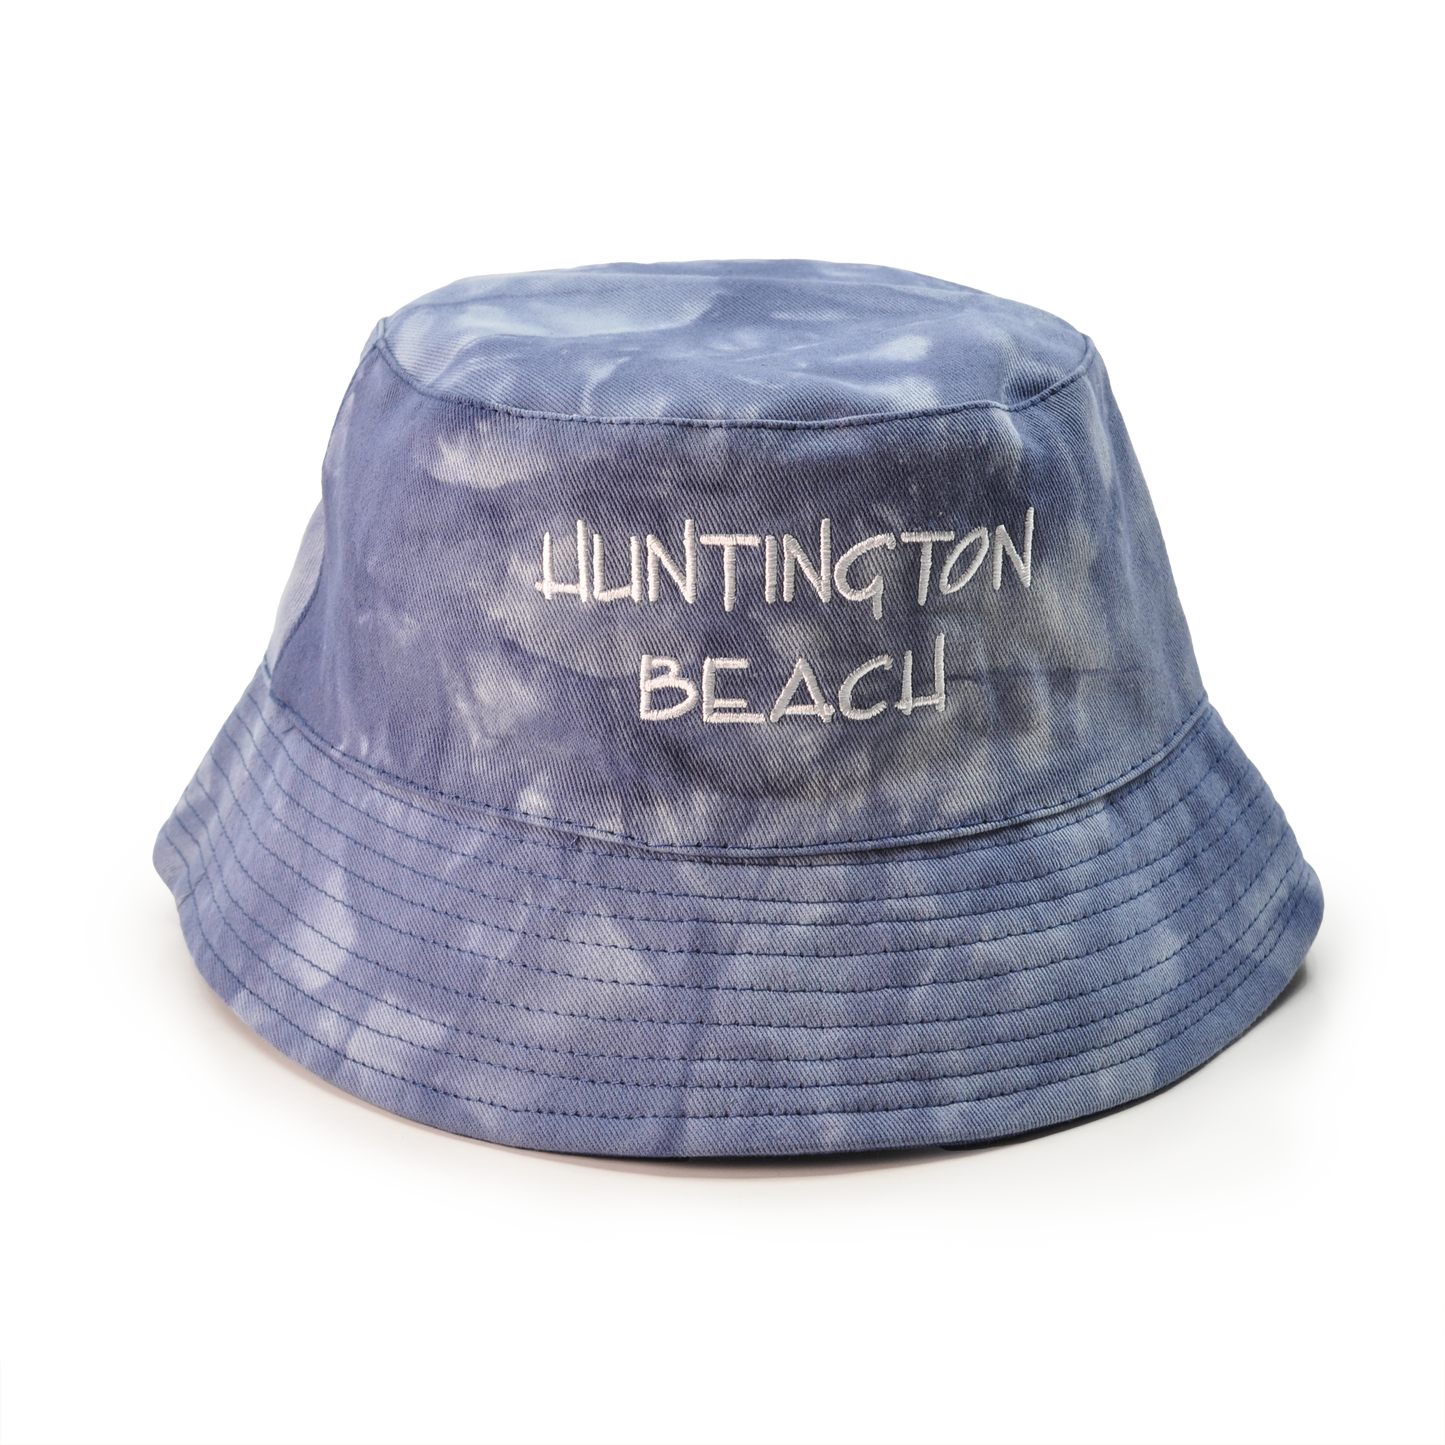 RIVER BEACH®-Reversible Your City Unisex 100% Cotton Packable Summer Travel Tye Dye Bucket Beach Sun Hat Outdoor Cap